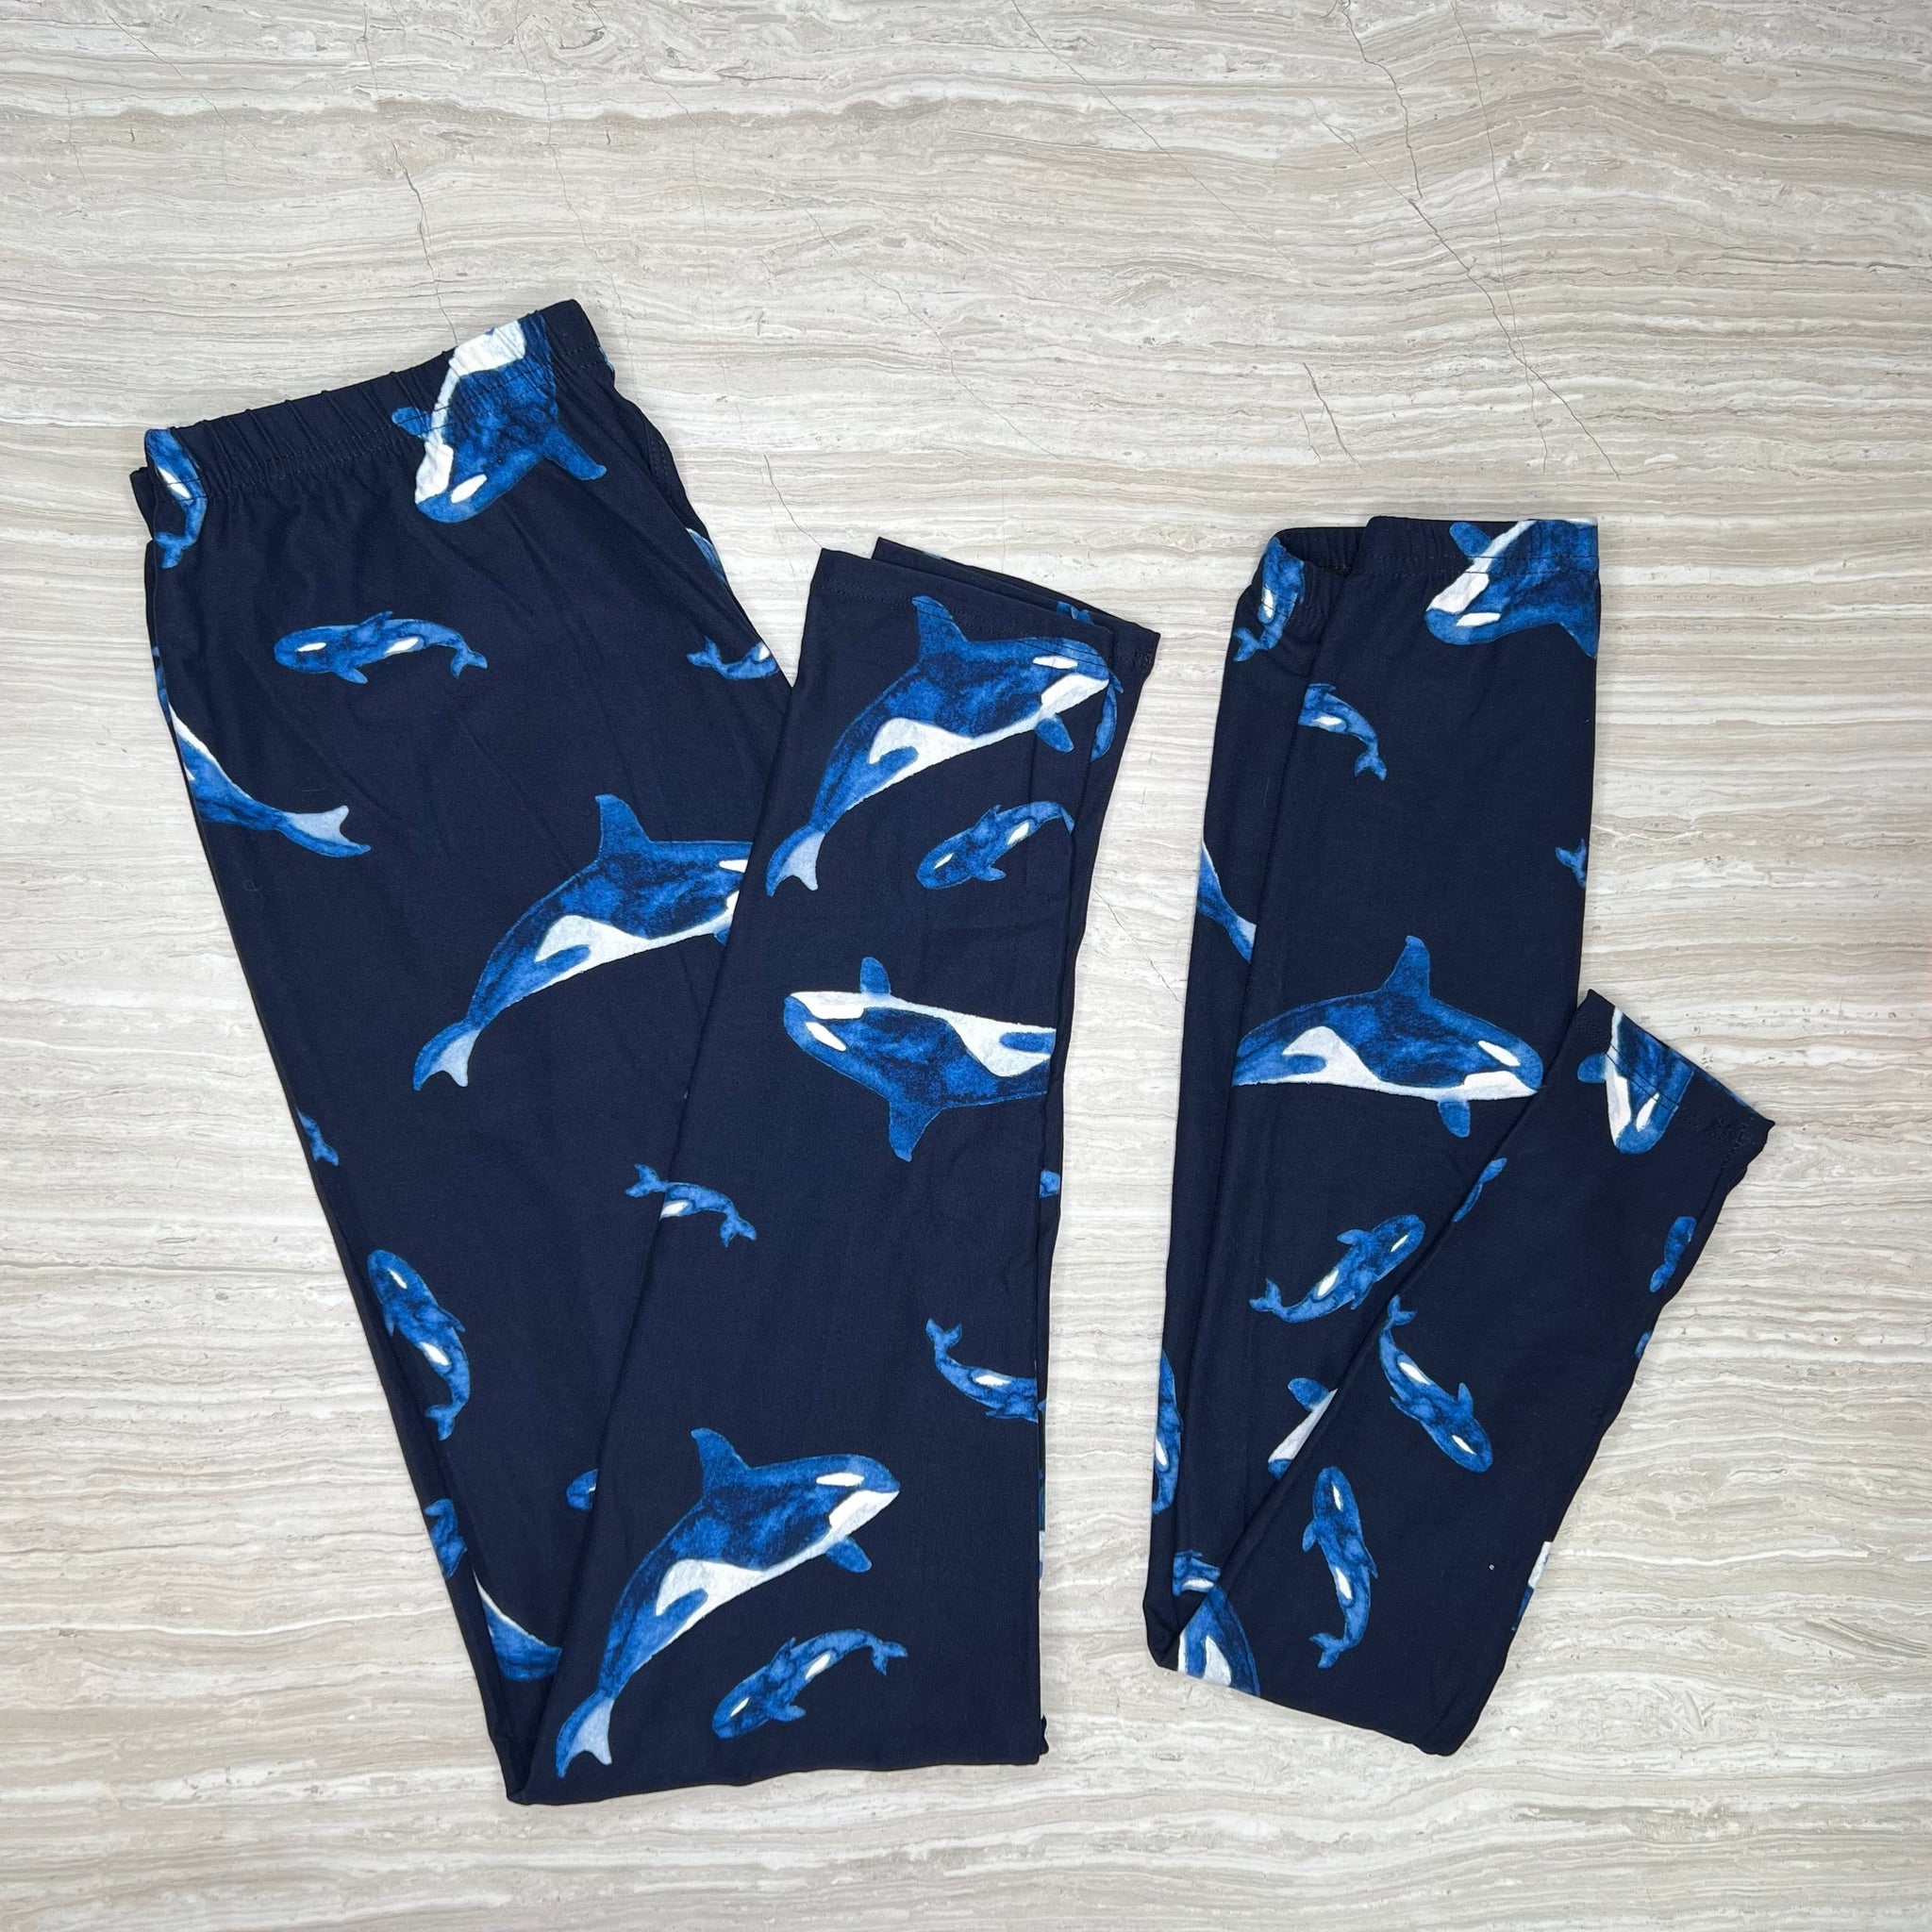 Orca Whale Print Blue Leggings - Adult & Kids - Full Length